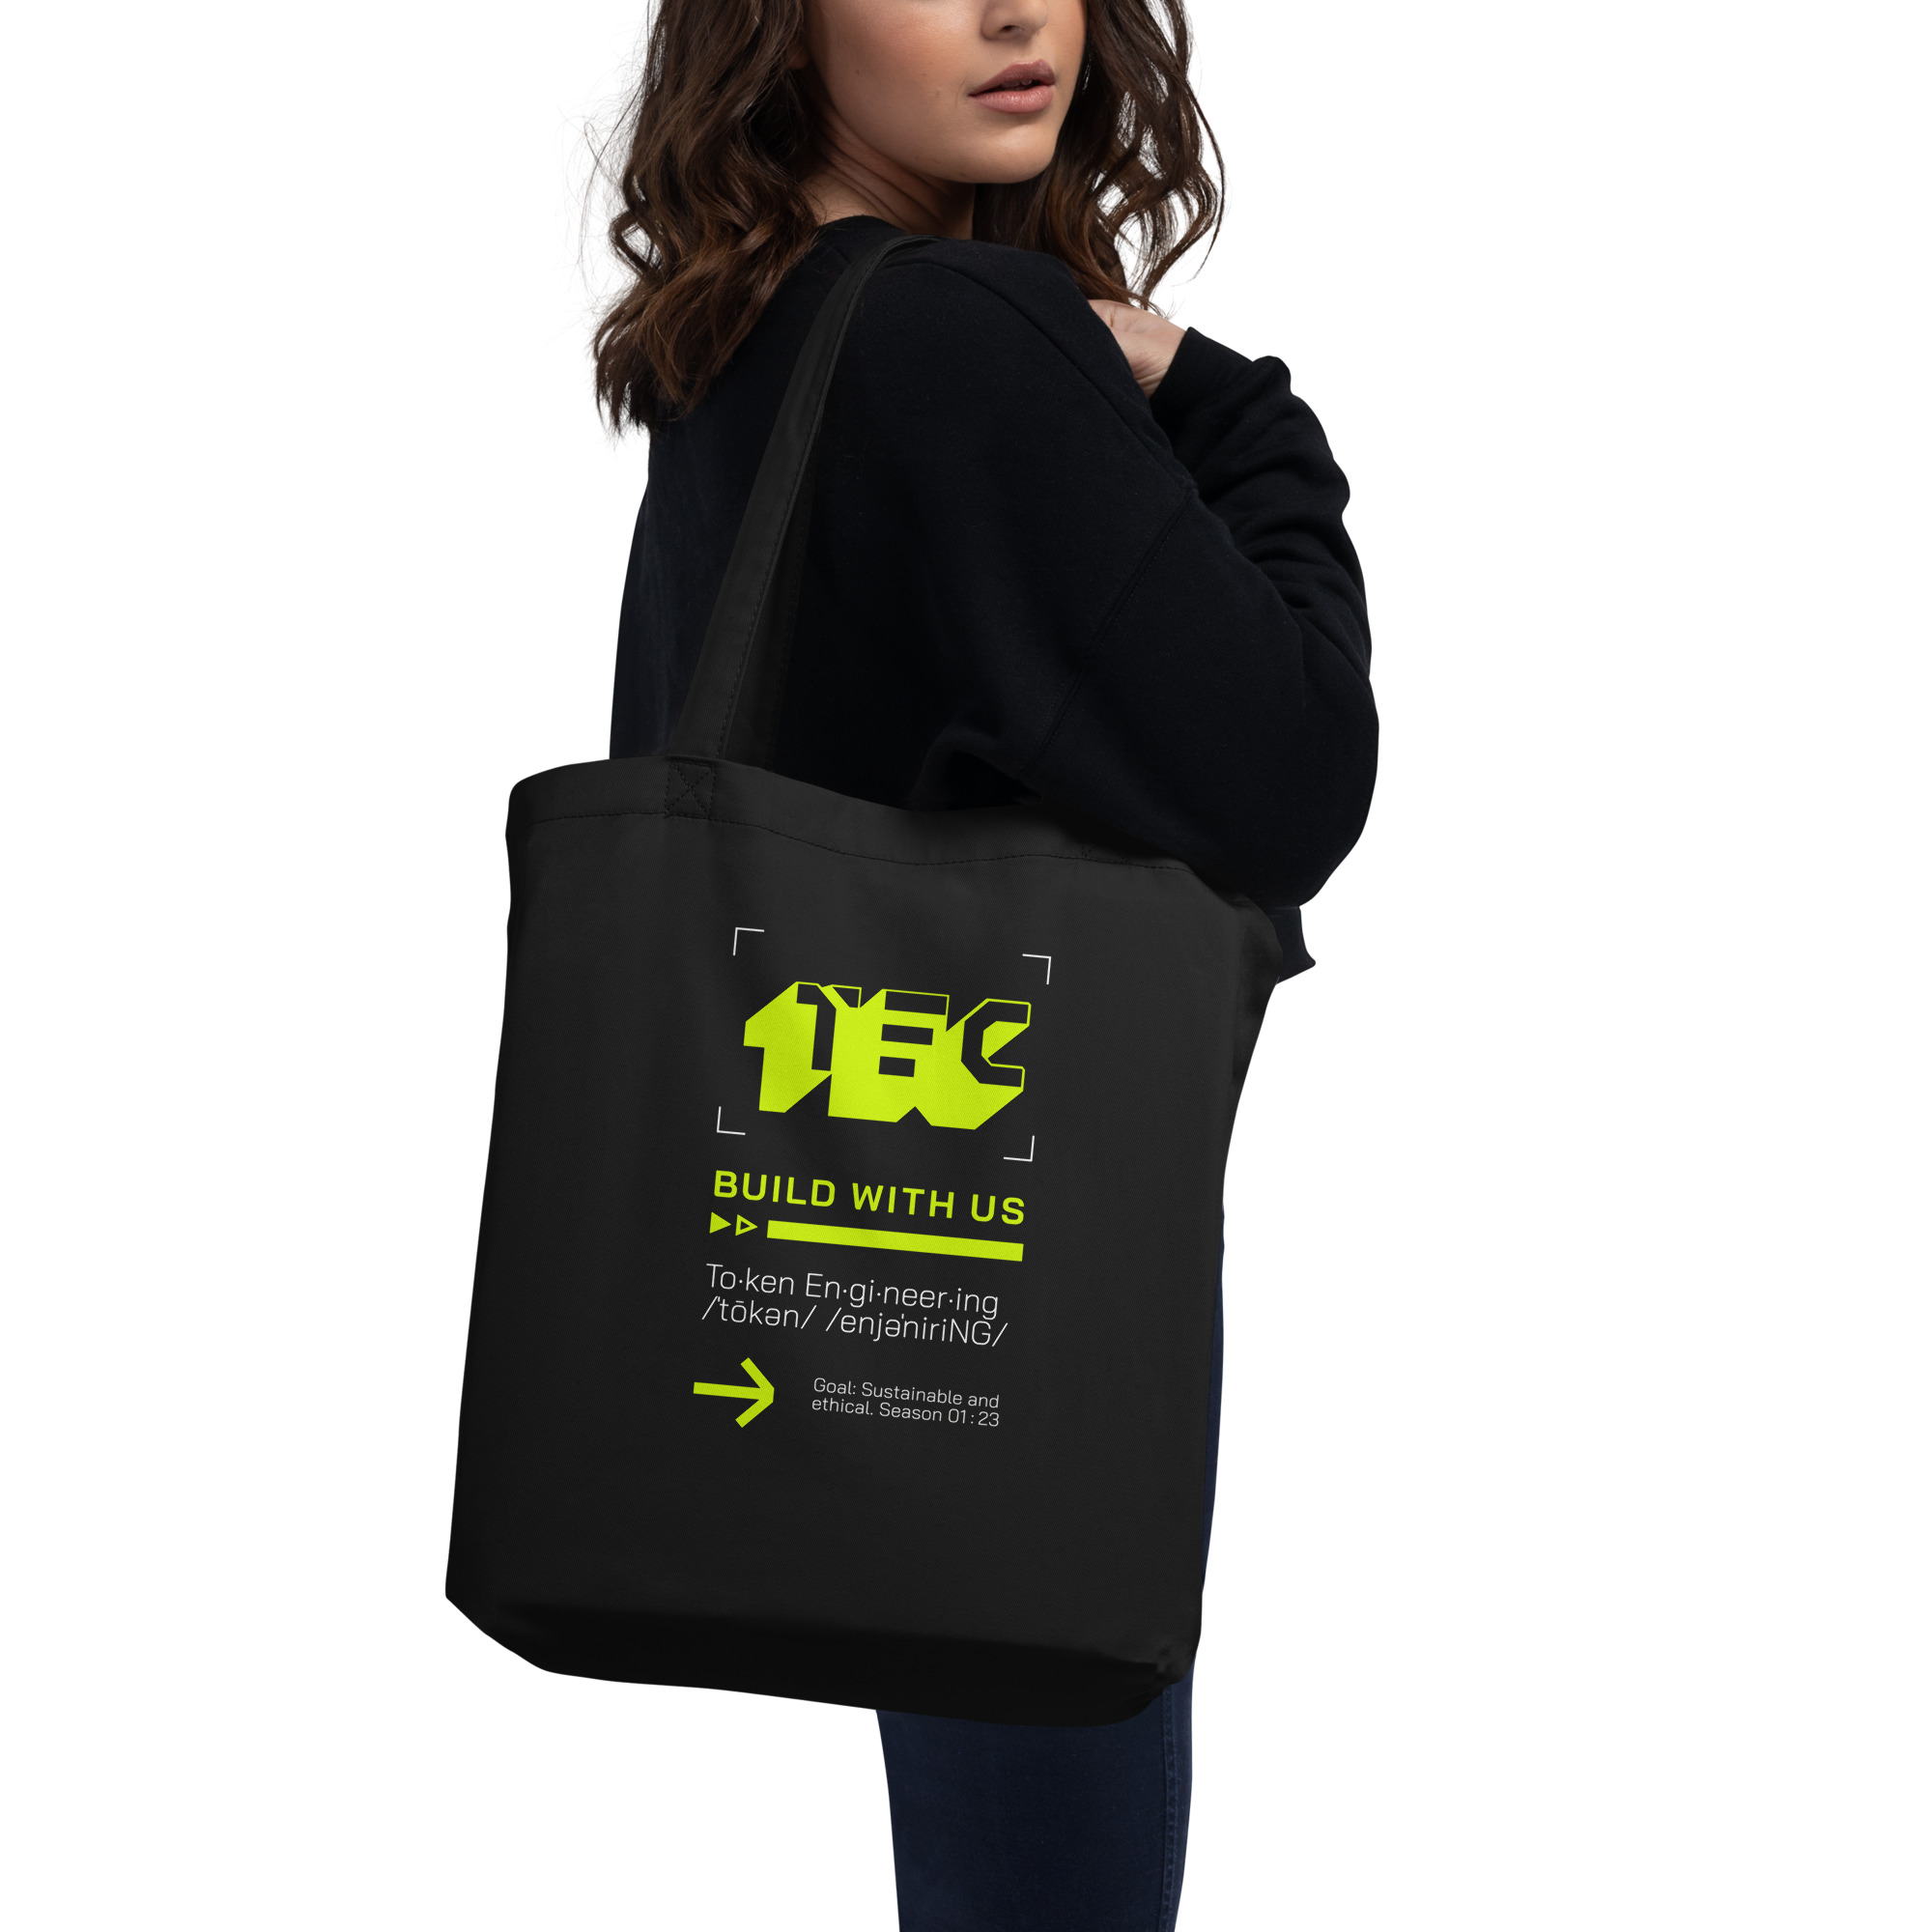 eco-tote-bag-black-back-64b7150da028c.jpg